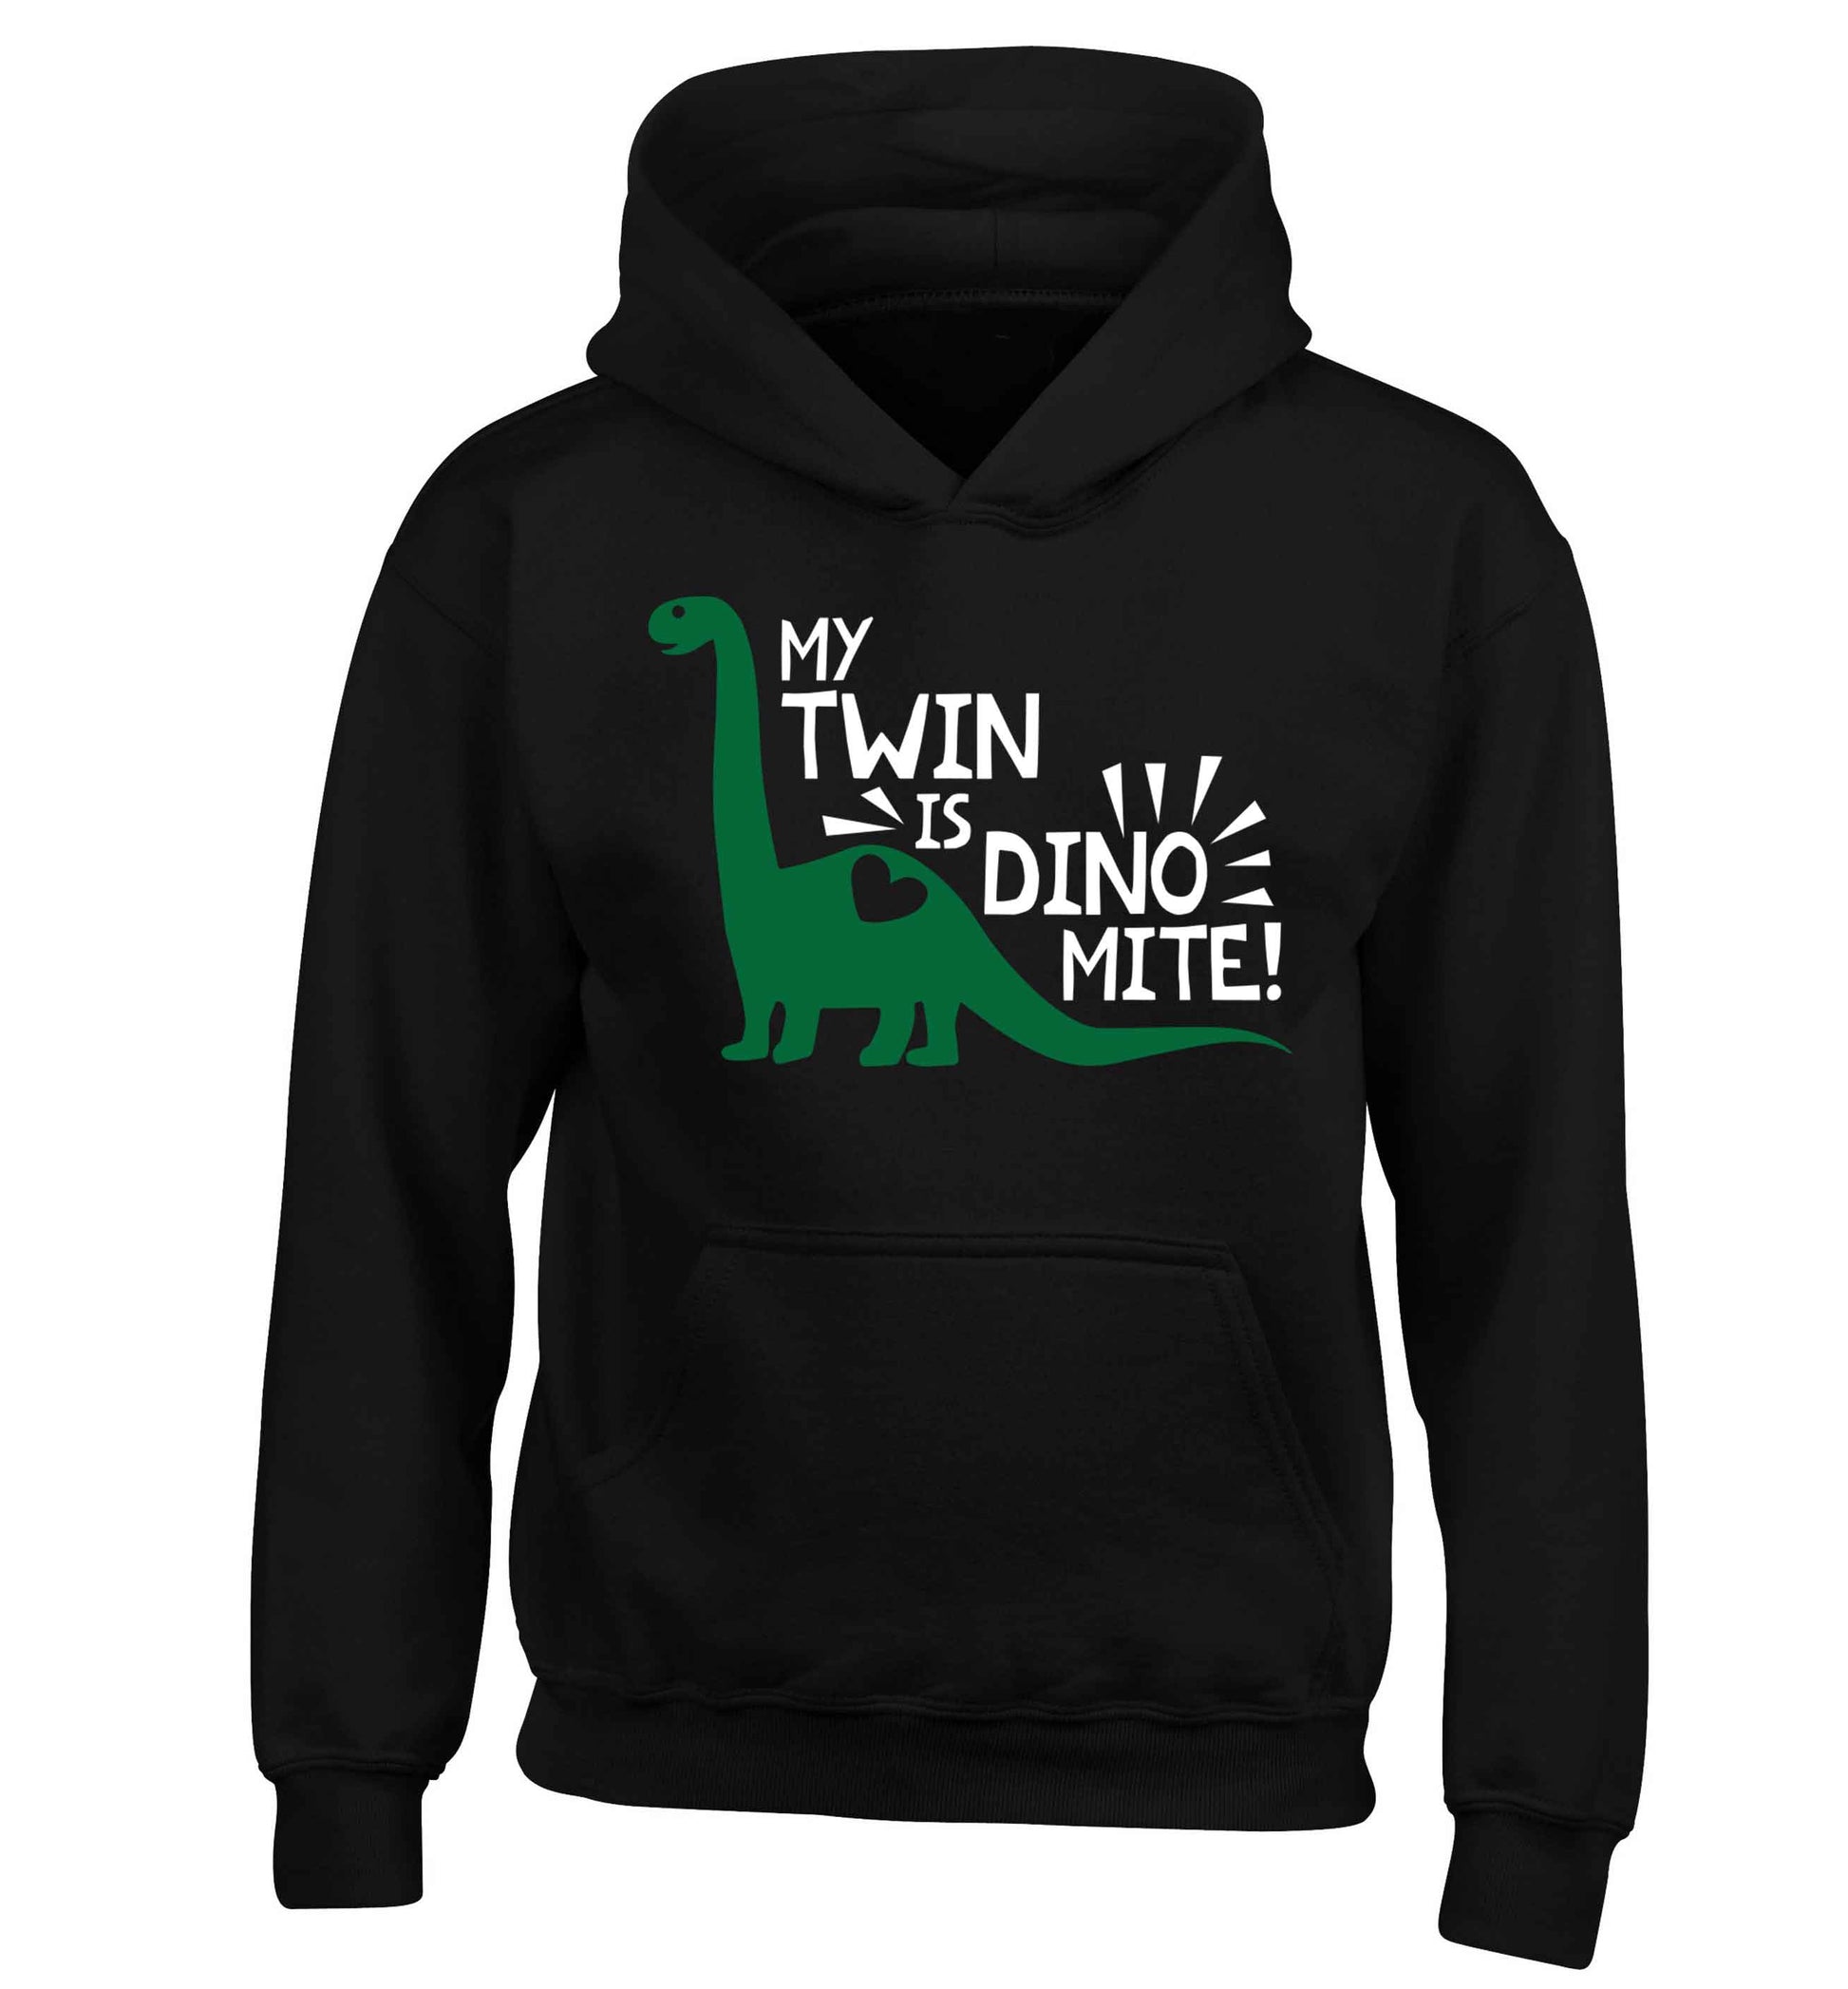 My twin is dinomite! children's black hoodie 12-13 Years